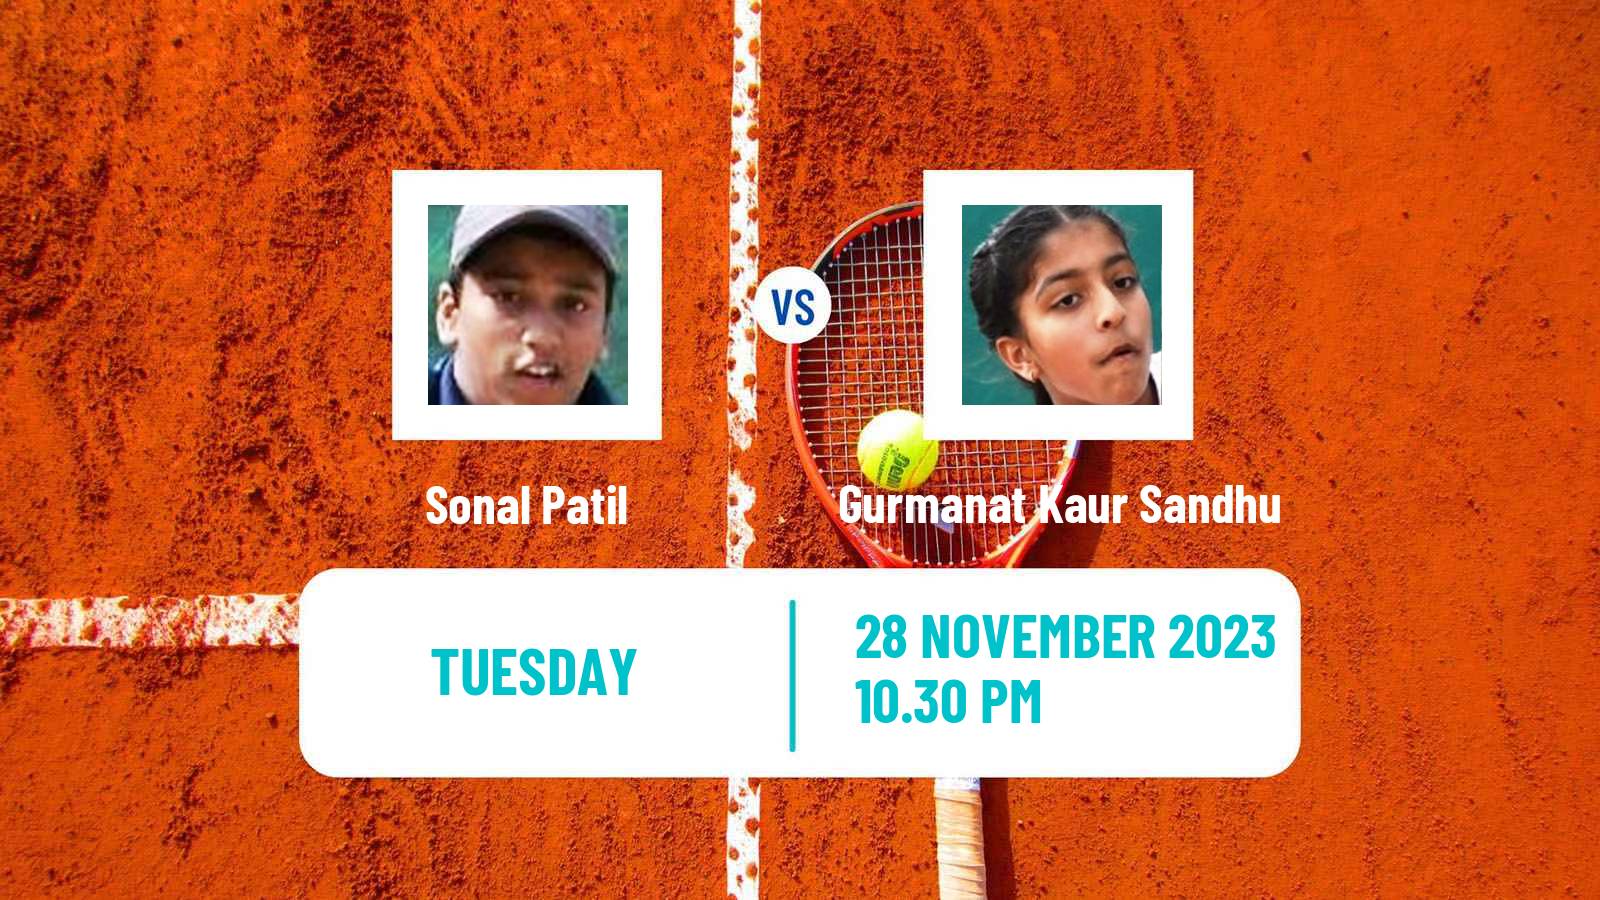 Tennis ITF W15 Ahmedabad Women 2023 Sonal Patil - Gurmanat Kaur Sandhu